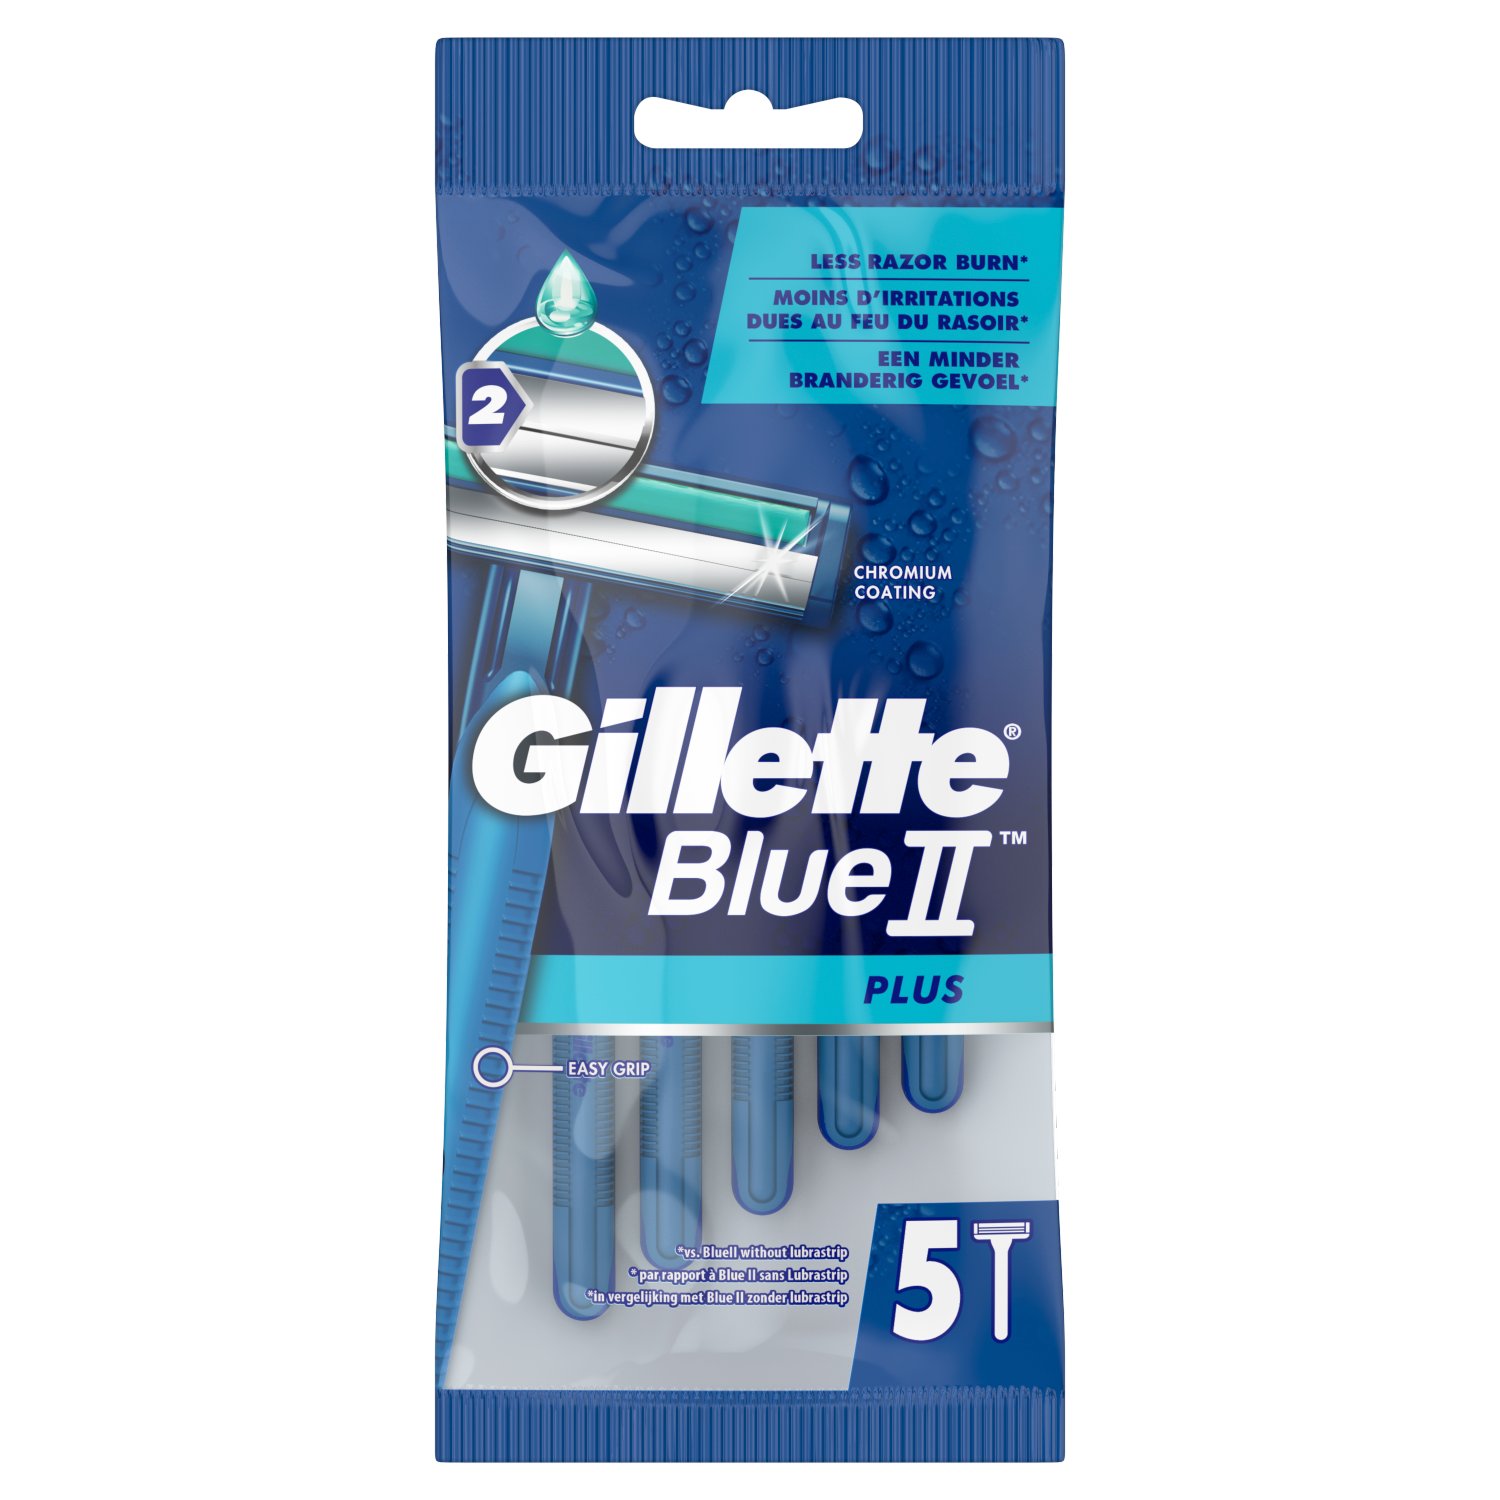 Gillette Blue II Plus Razors 5 Pack (5 Piece)